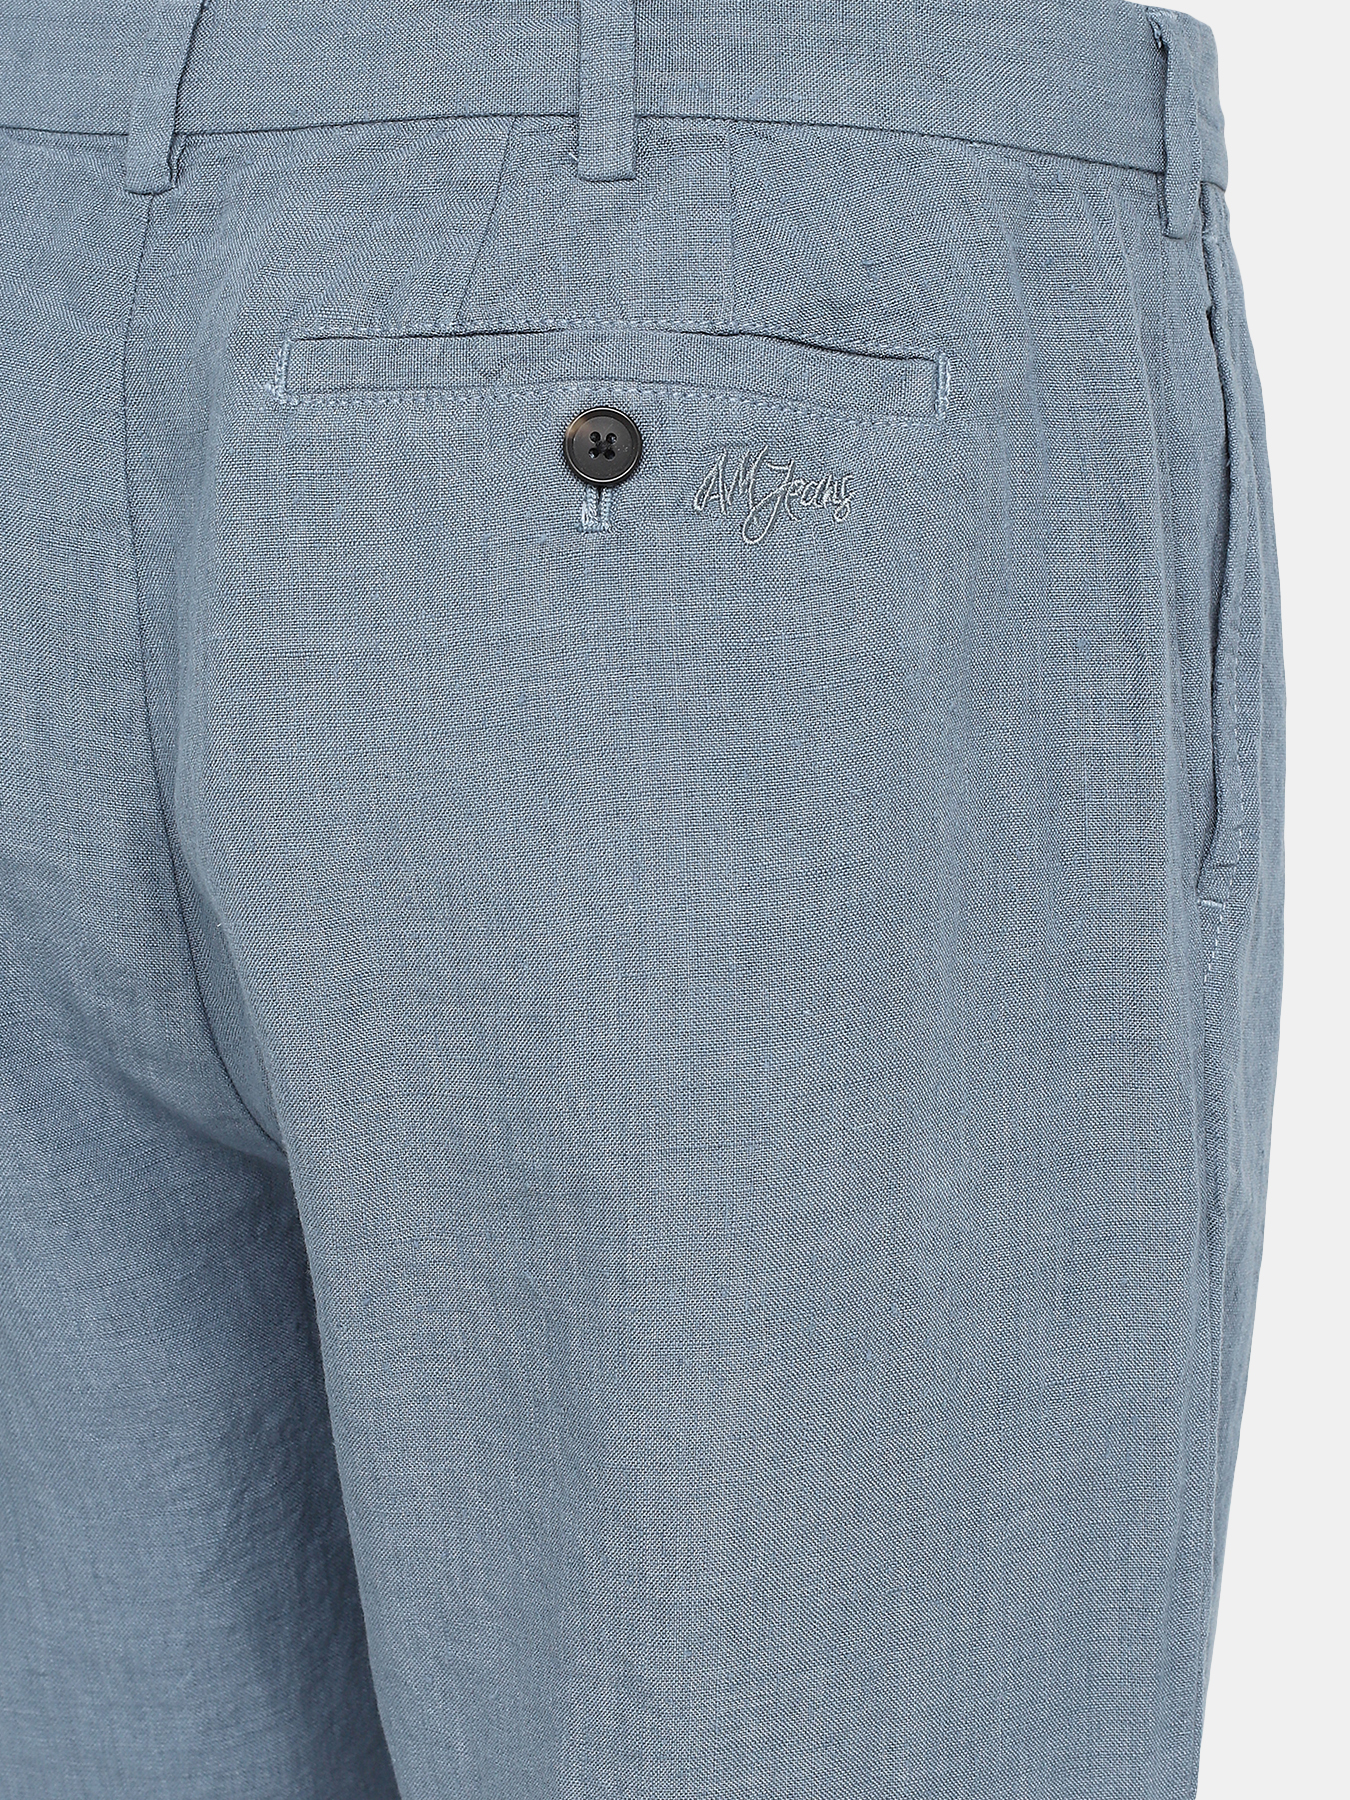 Брюки Alessandro Manzoni Jeans 401020-024, цвет голубой, размер 46 - фото 4